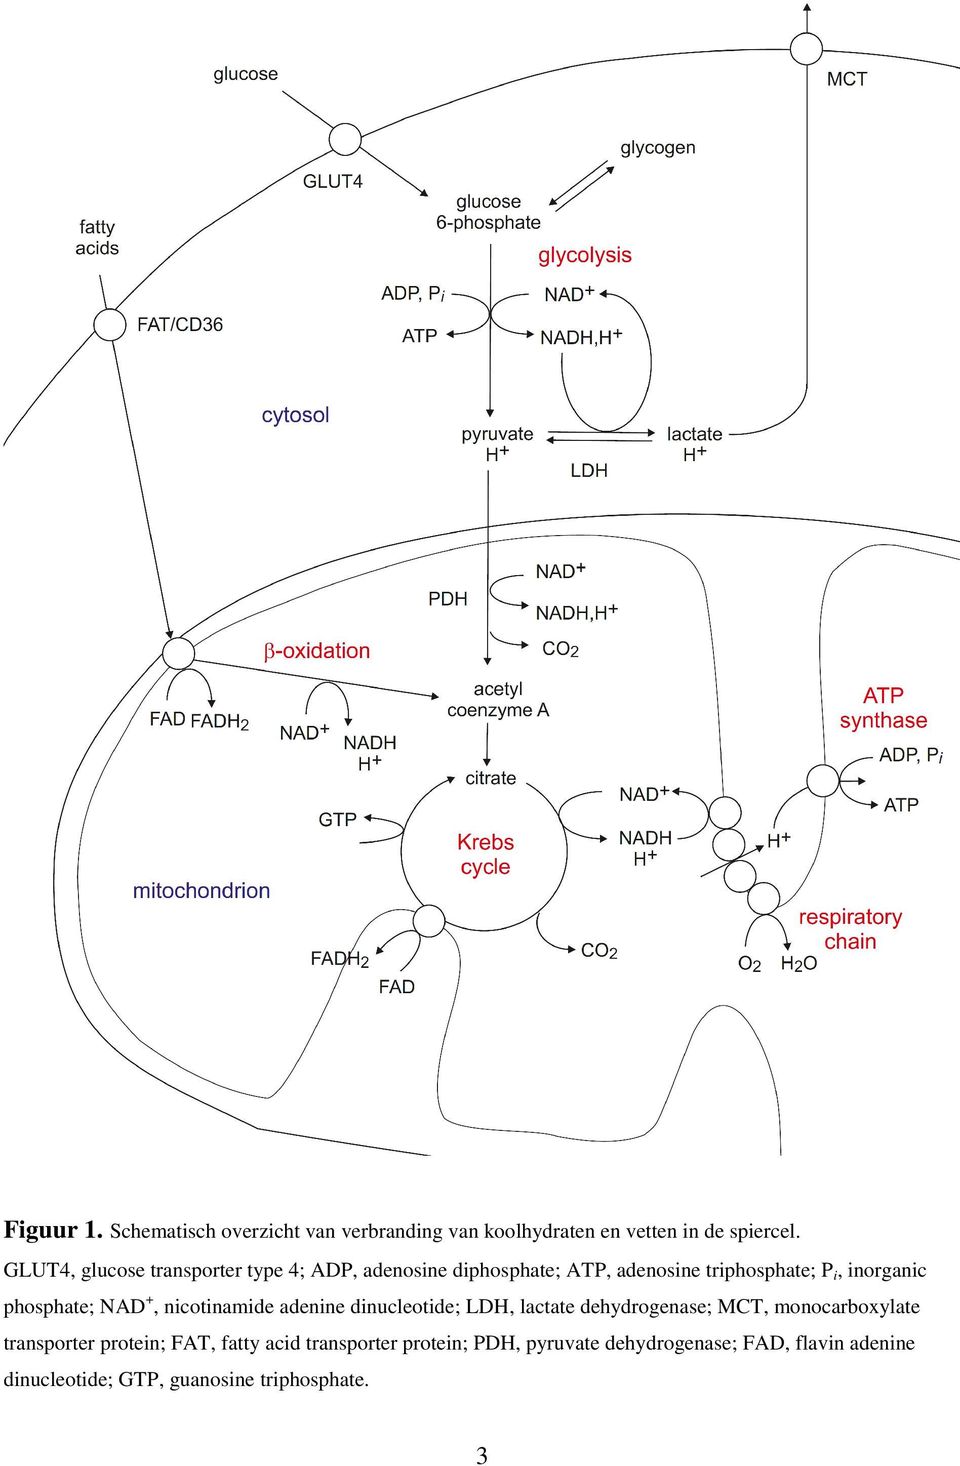 phosphate; NAD +, nicotinamide adenine dinucleotide; LDH, lactate dehydrogenase; MCT, monocarboxylate